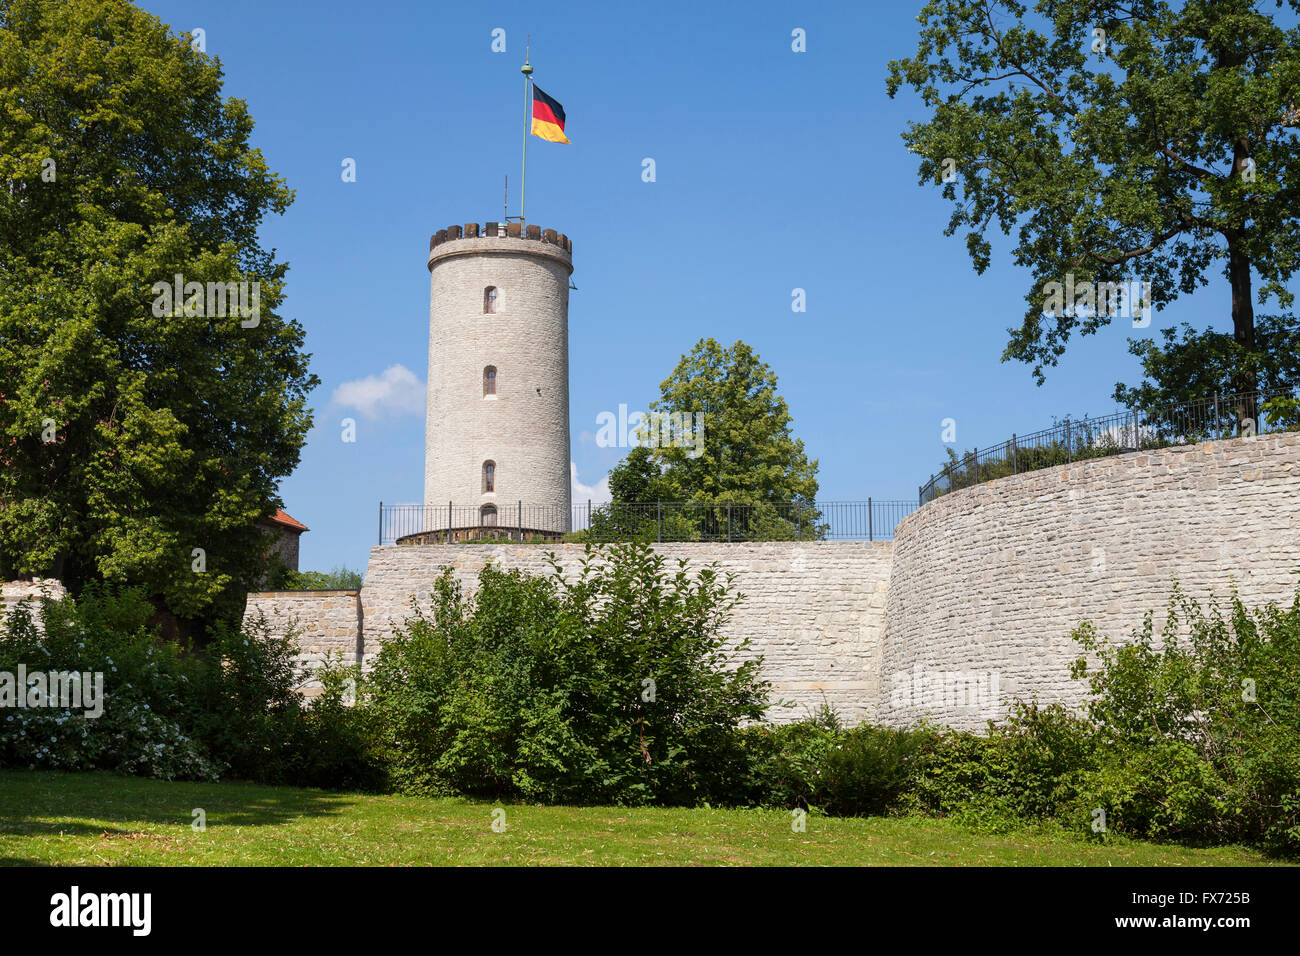 Sparrenburg or Sparrenberg Castle with waving flag, Bielefeld, North Rhine-Westphalia, Germany Stock Photo